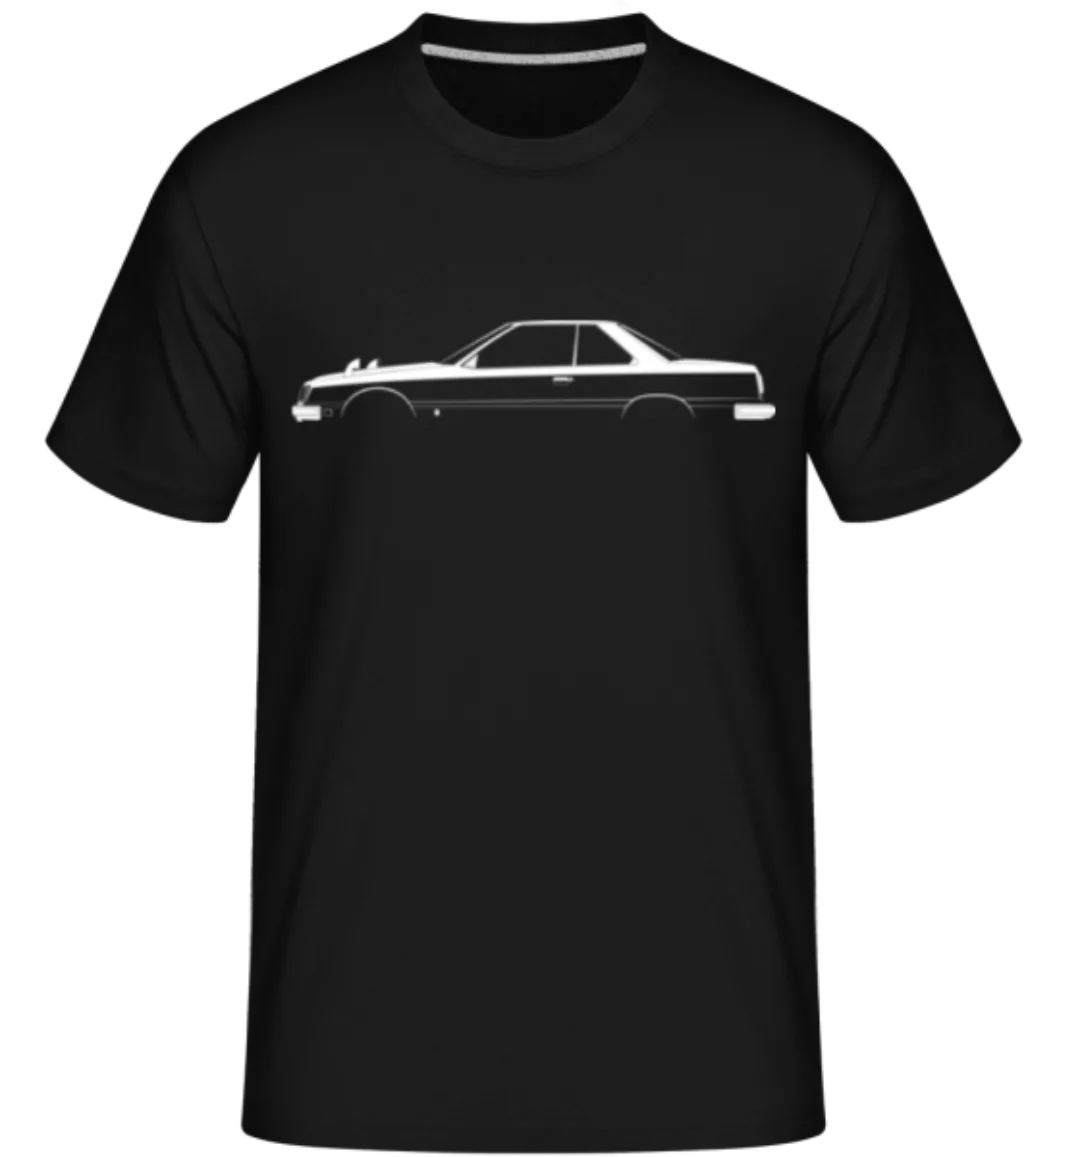 'Nissan Skyline 2000GT T.' Silhouette · Shirtinator Männer T-Shirt günstig online kaufen